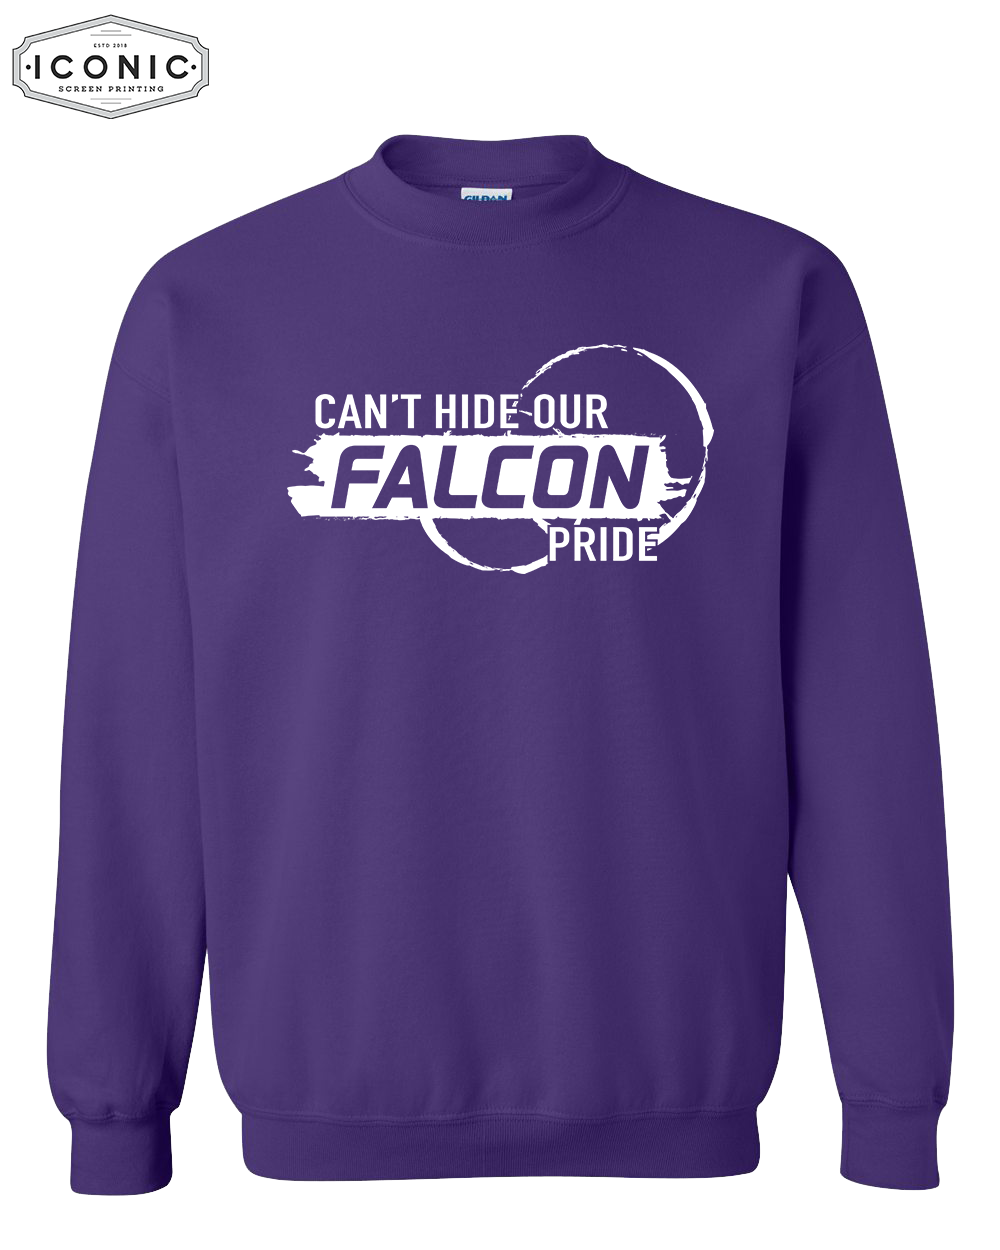 Falcon Pride - Heavy Blend Sweatshirt